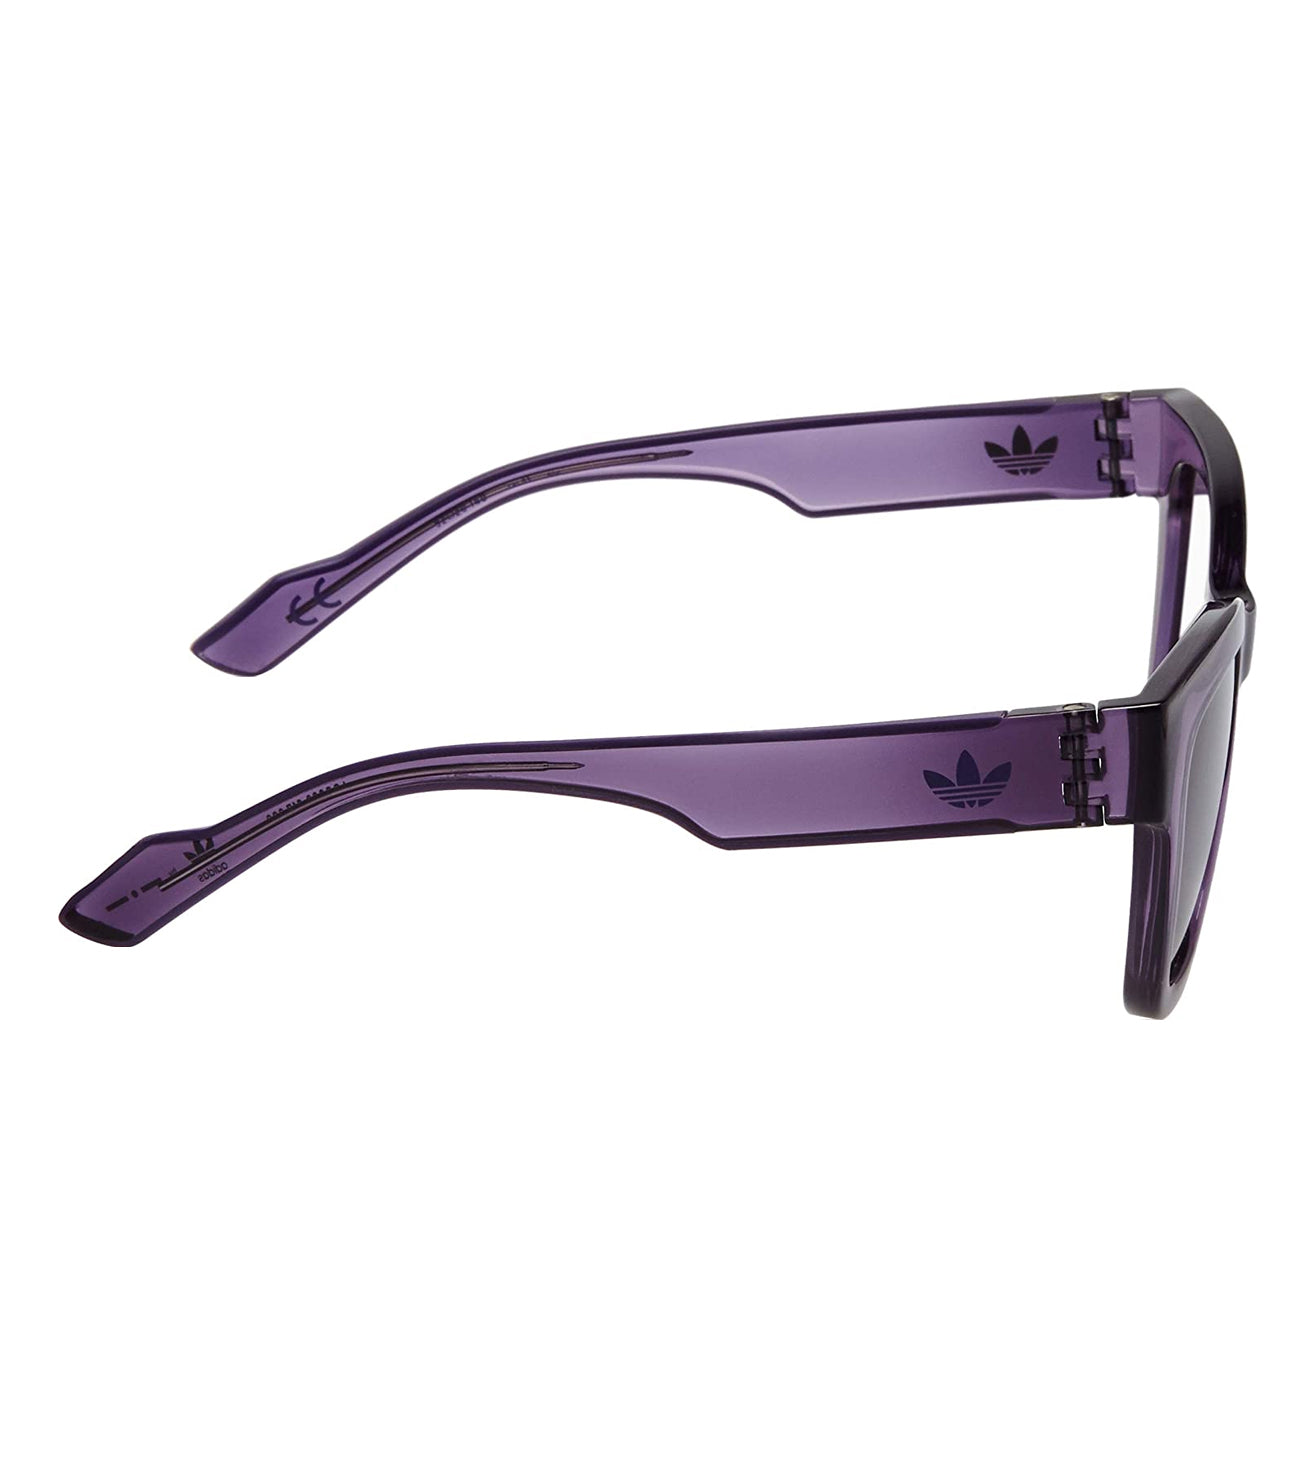 Adidas Originals Women's Purple Wayfarer Sunglasses